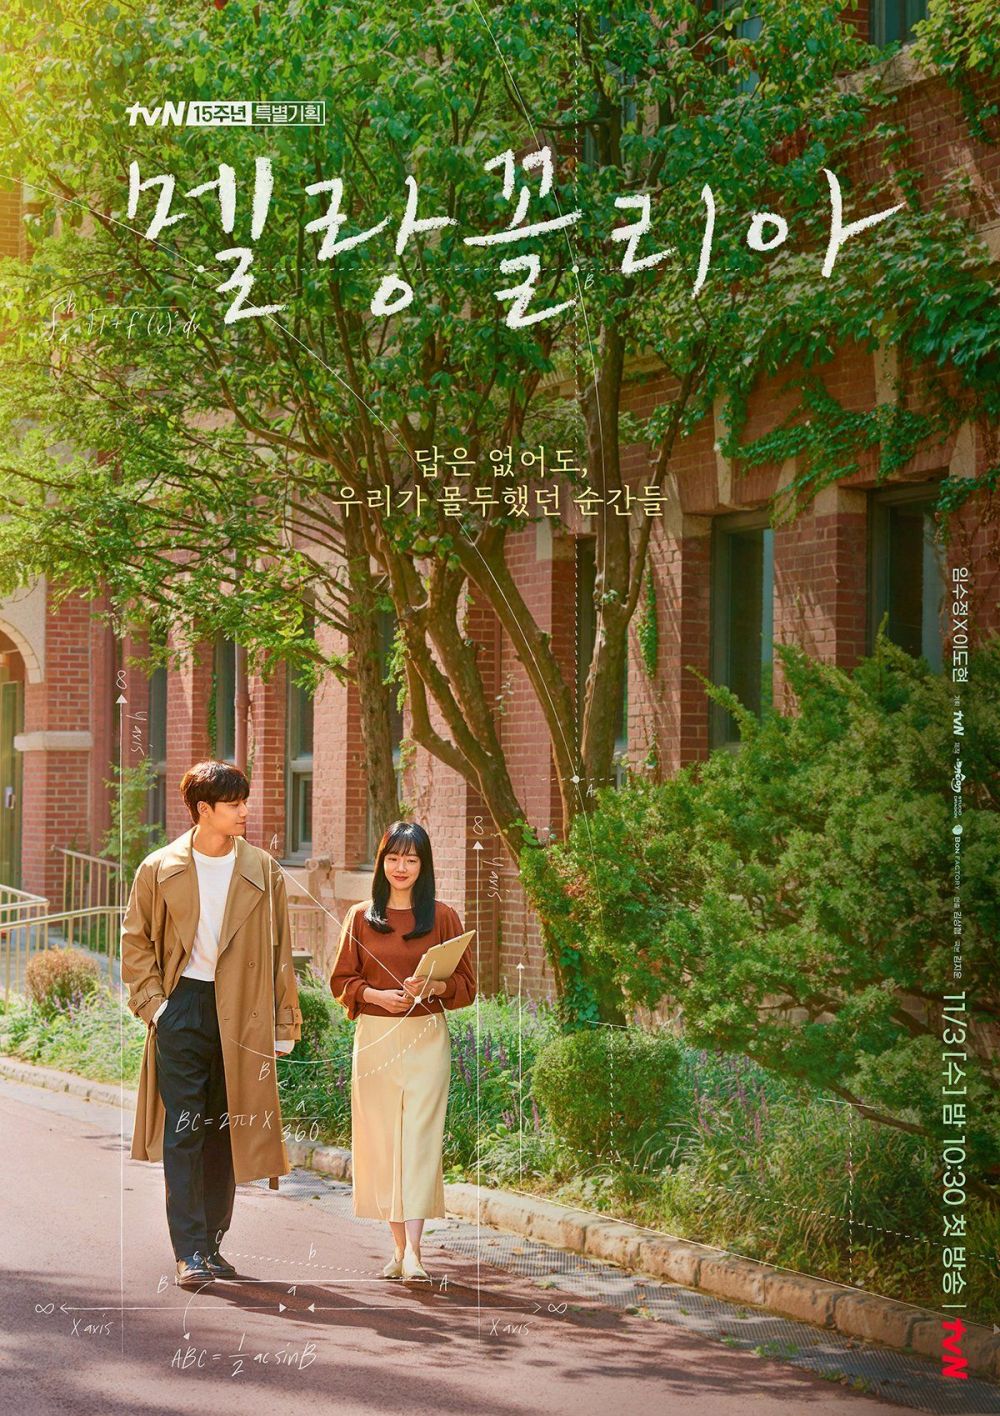 Sinopsis drama Korea Melancholia, Lee Do-hyun jadi murid SMA